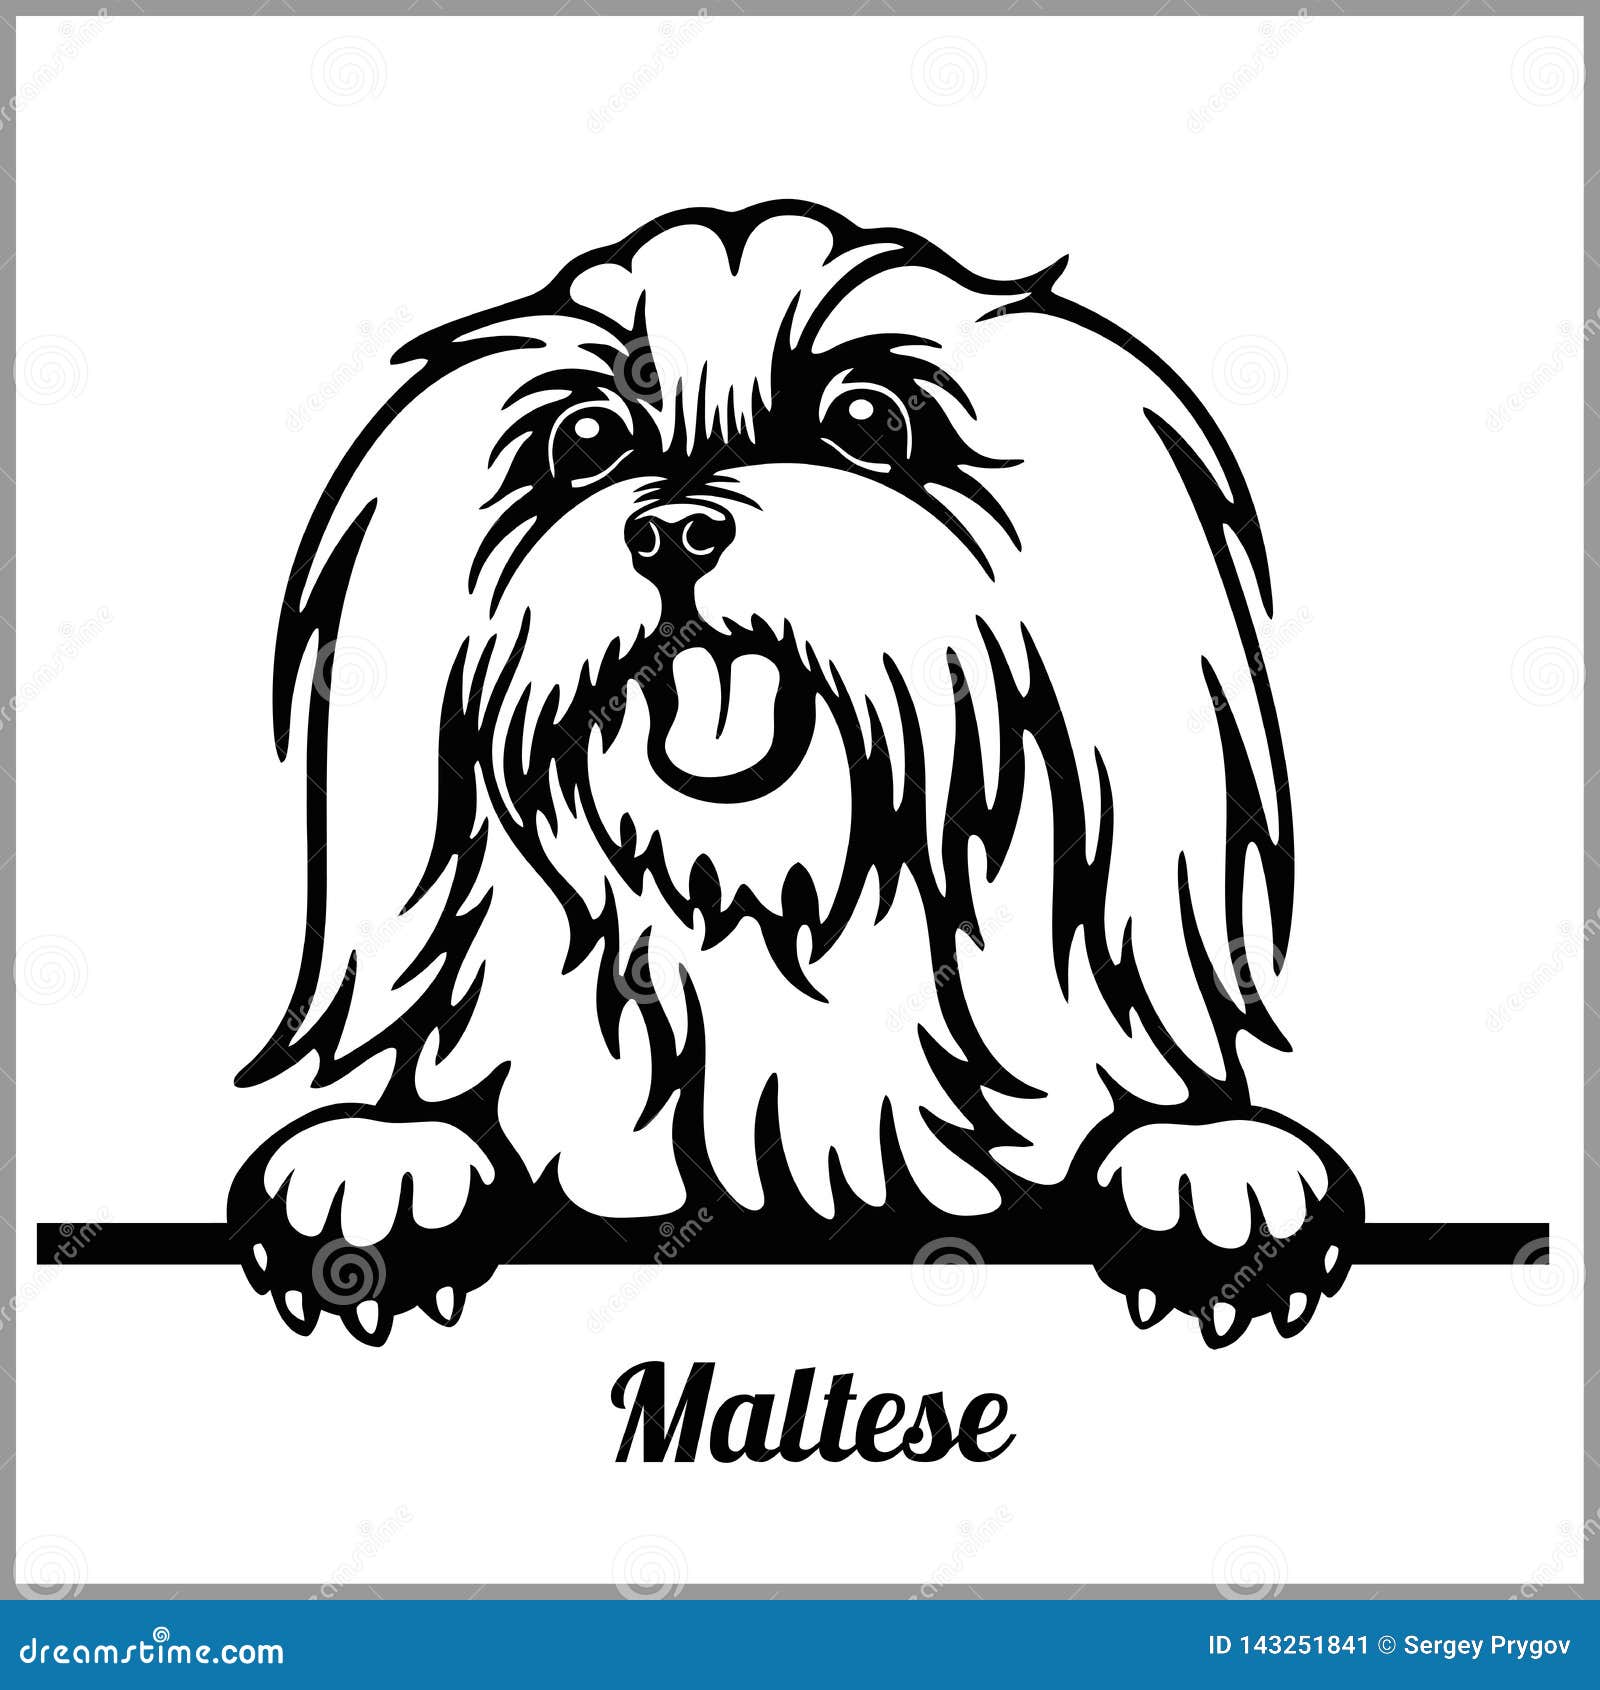 maltese - peeking dogs - - breed face head  on white